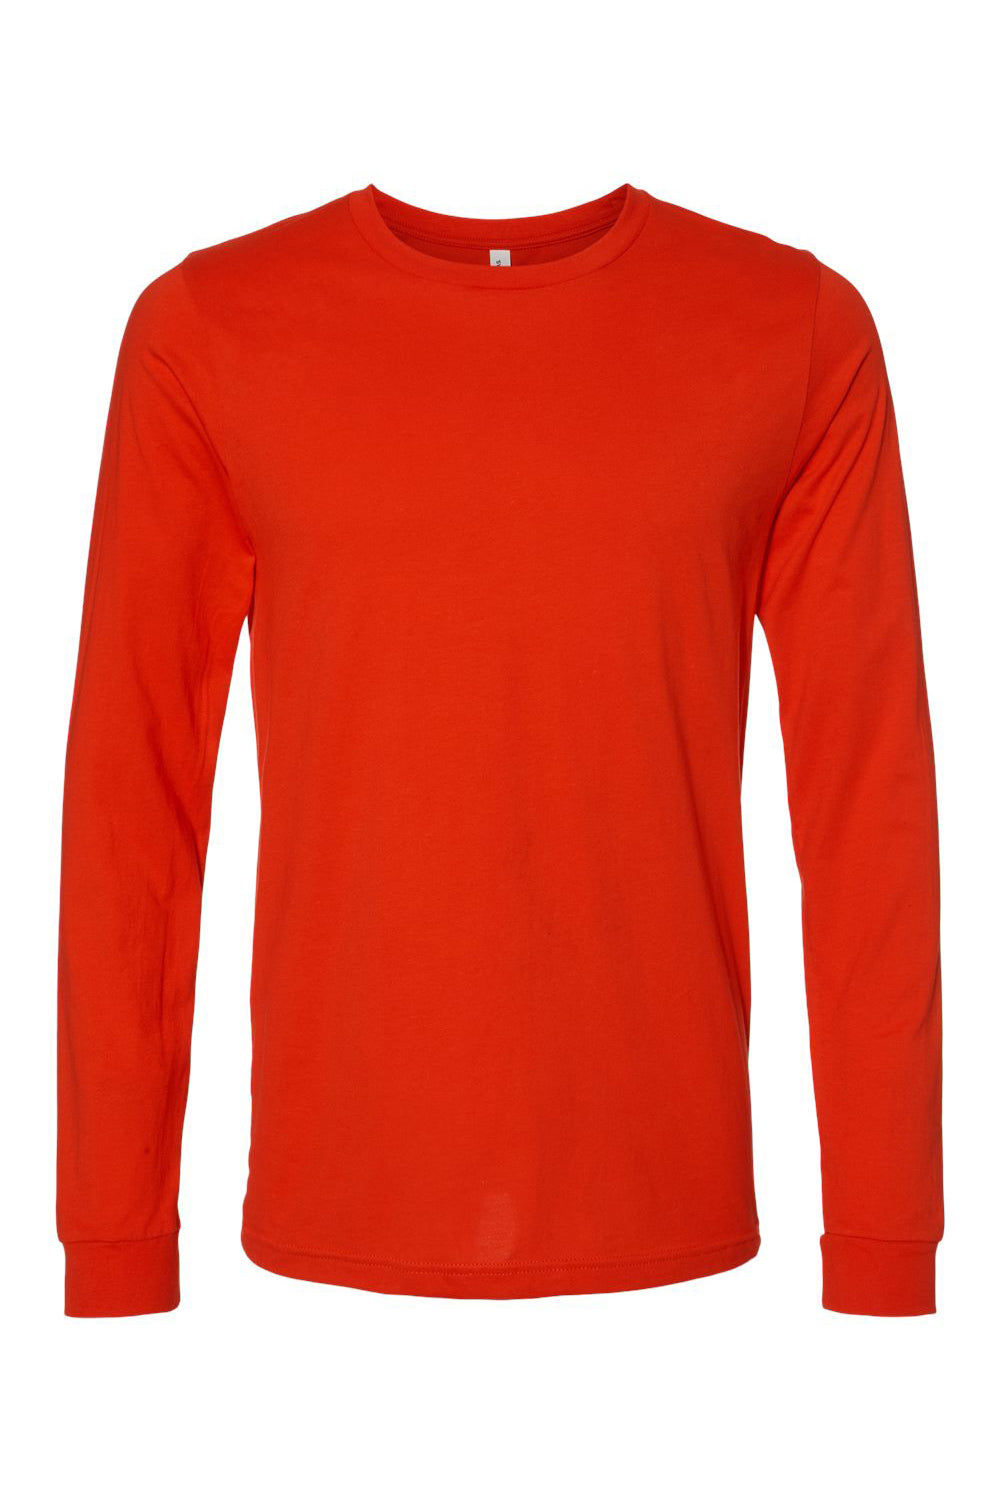 Bella + Canvas BC3501/3501 Mens Jersey Long Sleeve Crewneck T-Shirt Poppy Red Flat Front